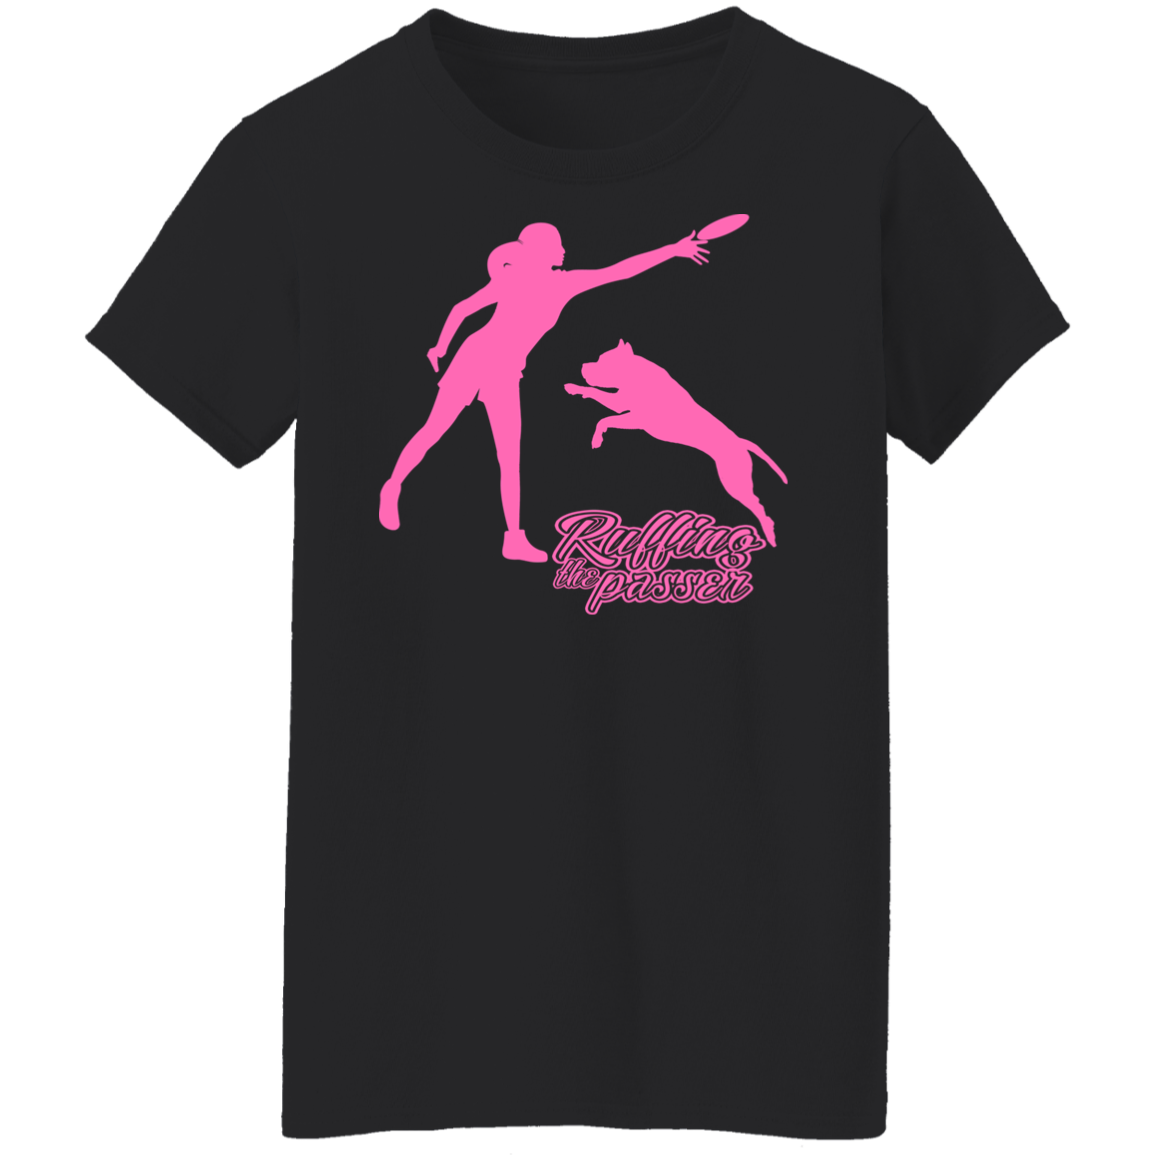 ArtichokeUSA Custom Design. Ruffing the Passer. Pitbull Edition. Female Version. Ladies' 5.3 oz. T-Shirt